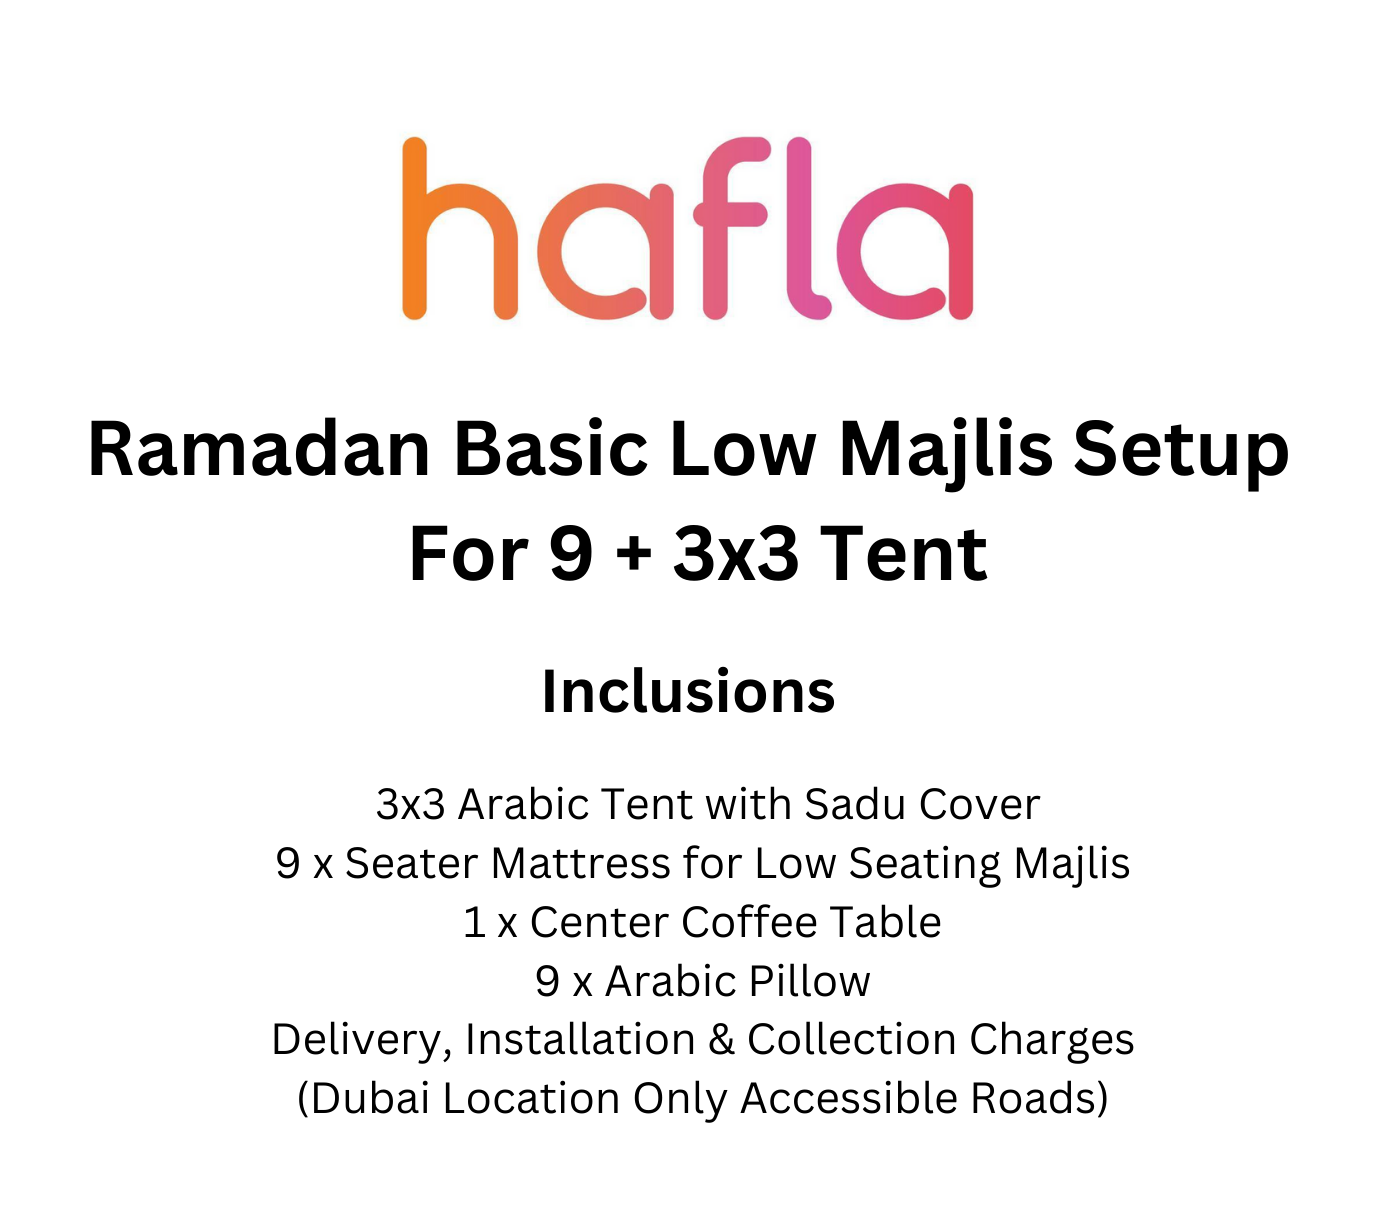 Ramadan Basic Majlis Setup For 9 + 3x3 Tent